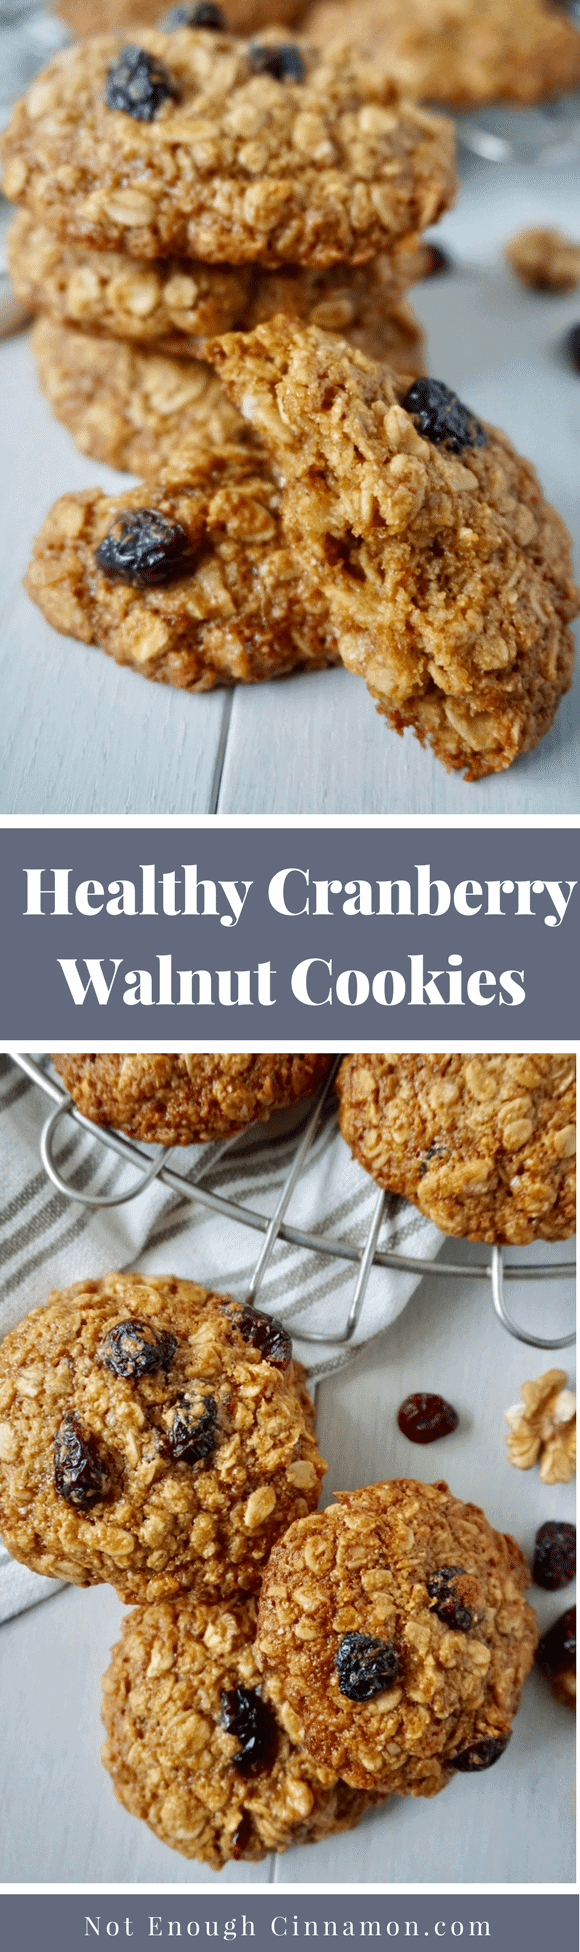 Cranberry Walnut Oatmeal Cookies #GlutenFree #RefinedSugarFree #Dairy Free